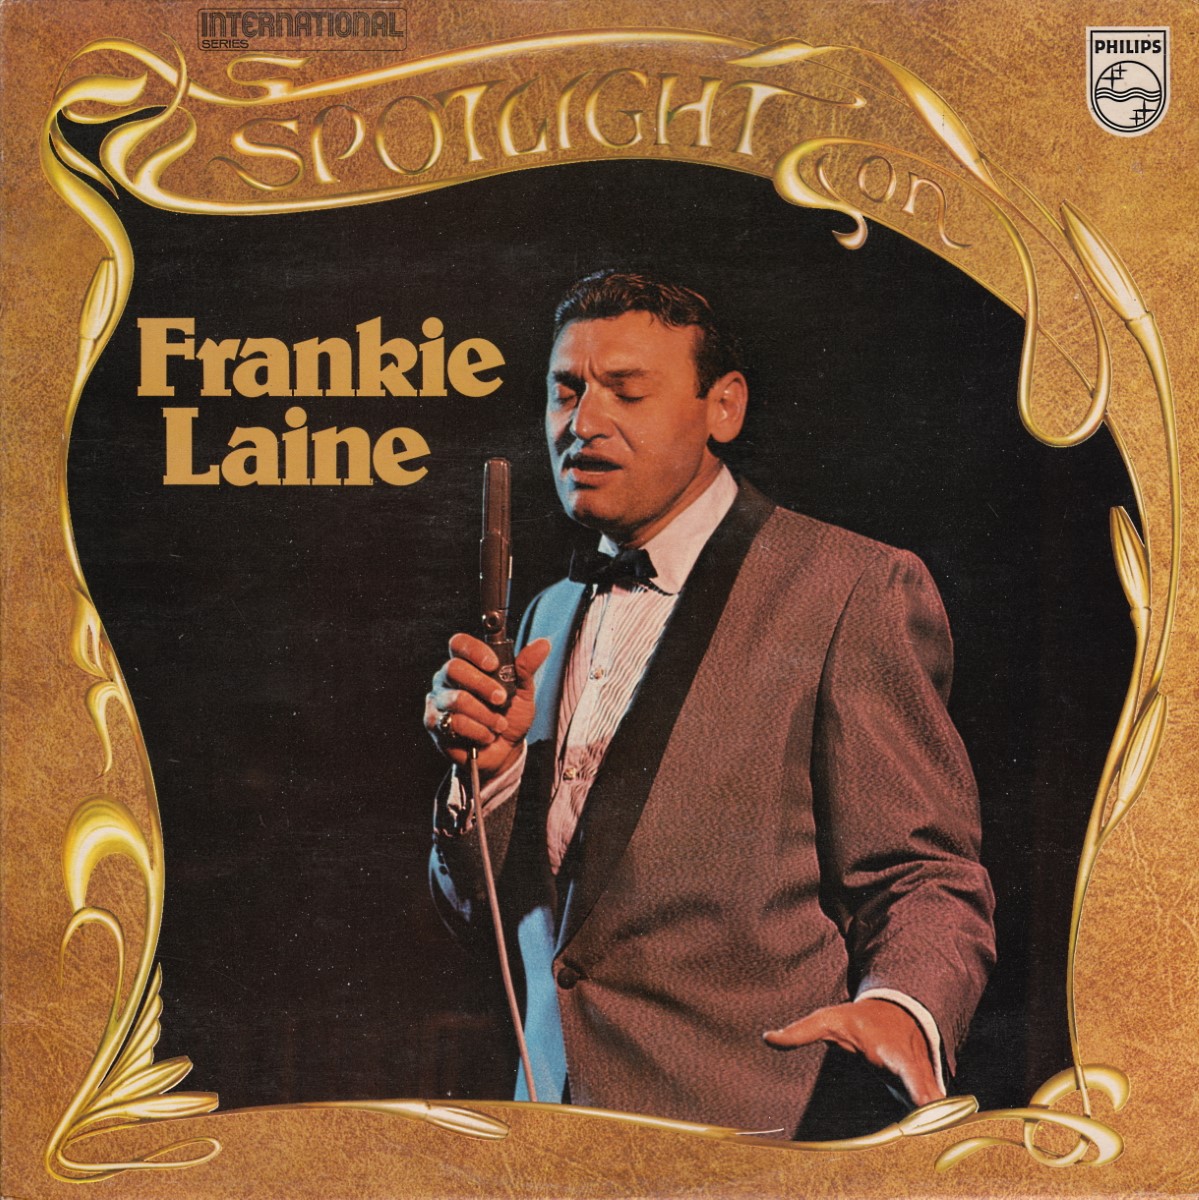 Frankie Laine - Spotlight On Frankie Laine (1977)